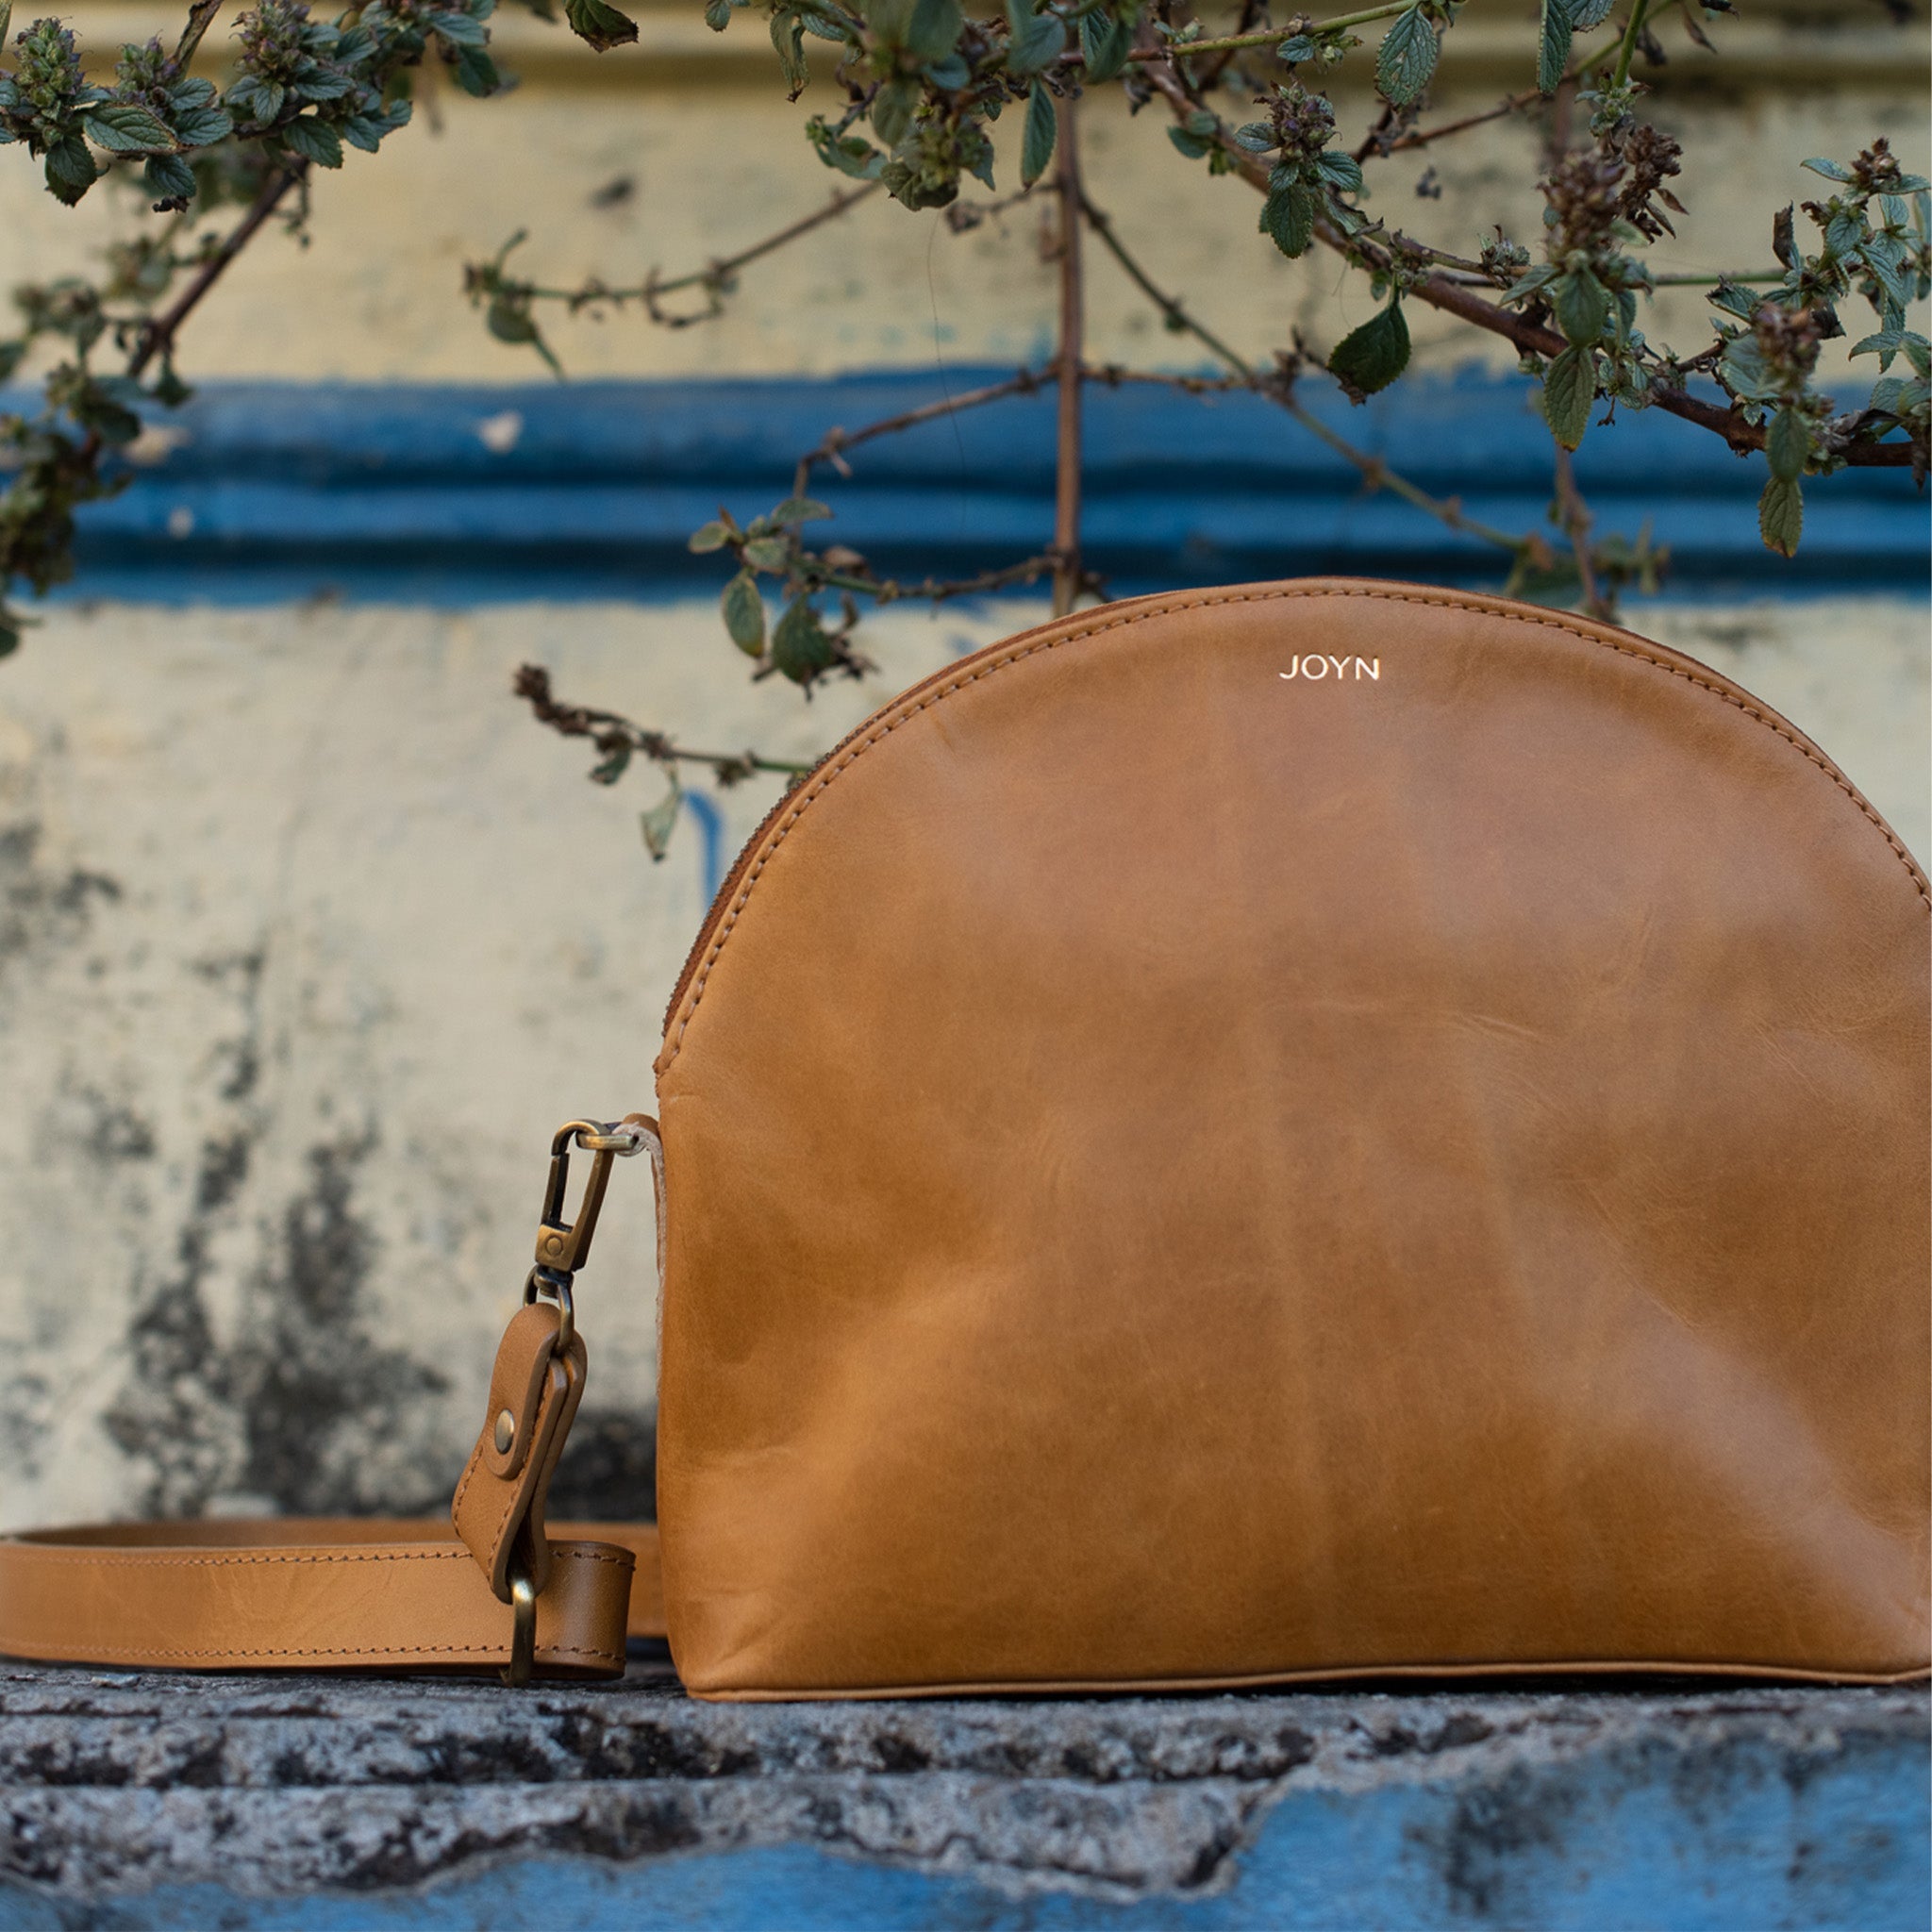 Halfmoon Crossbody Handbag - Camel Leather